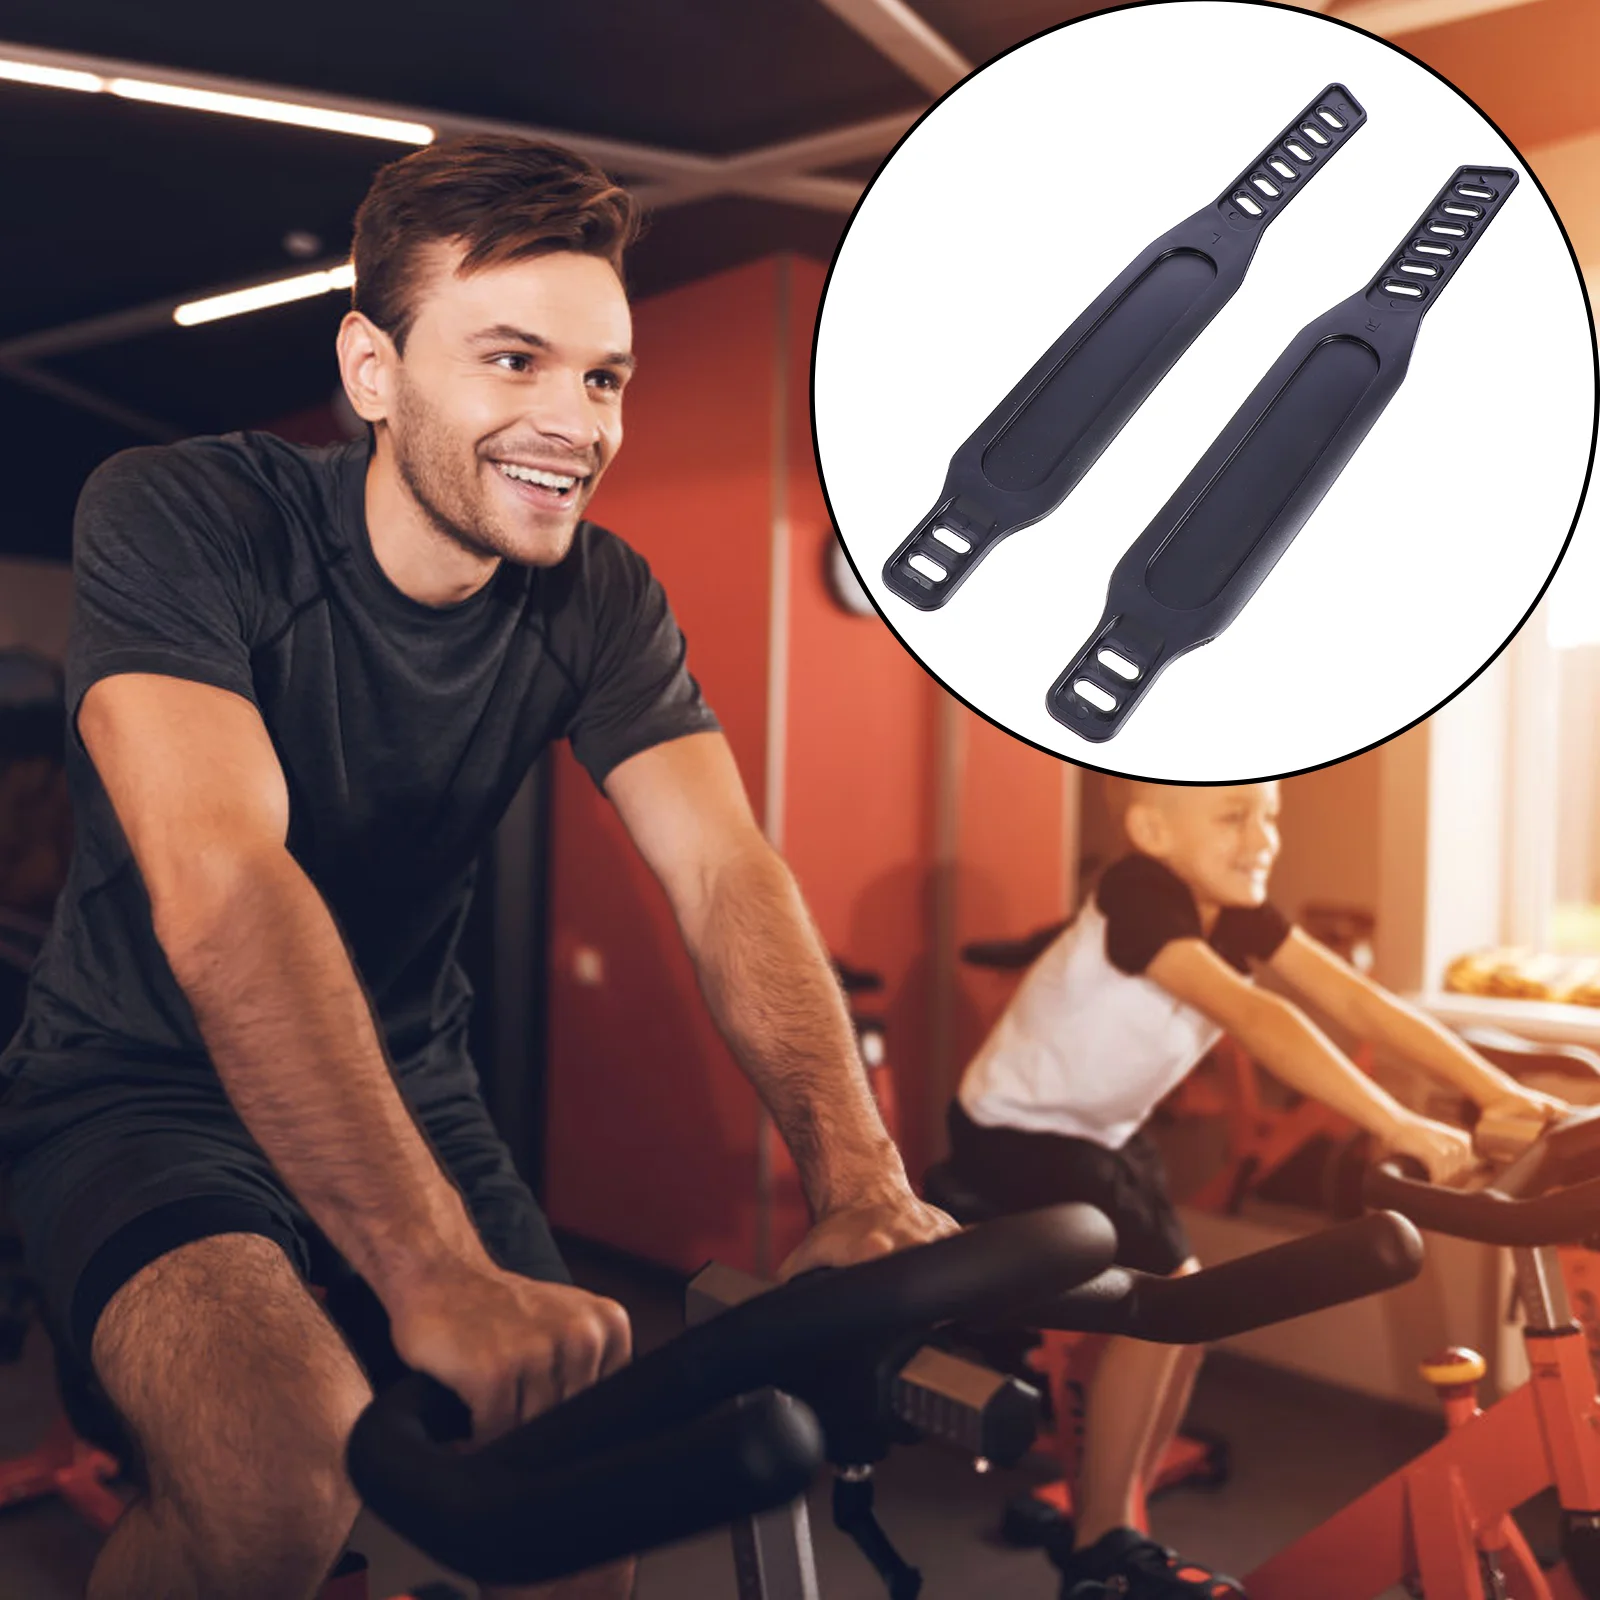 

2 Pcs Foot Strap Anti- Pedal Straps Gym Accessories Excersize Bike Exercise Belts BMX Adjustable